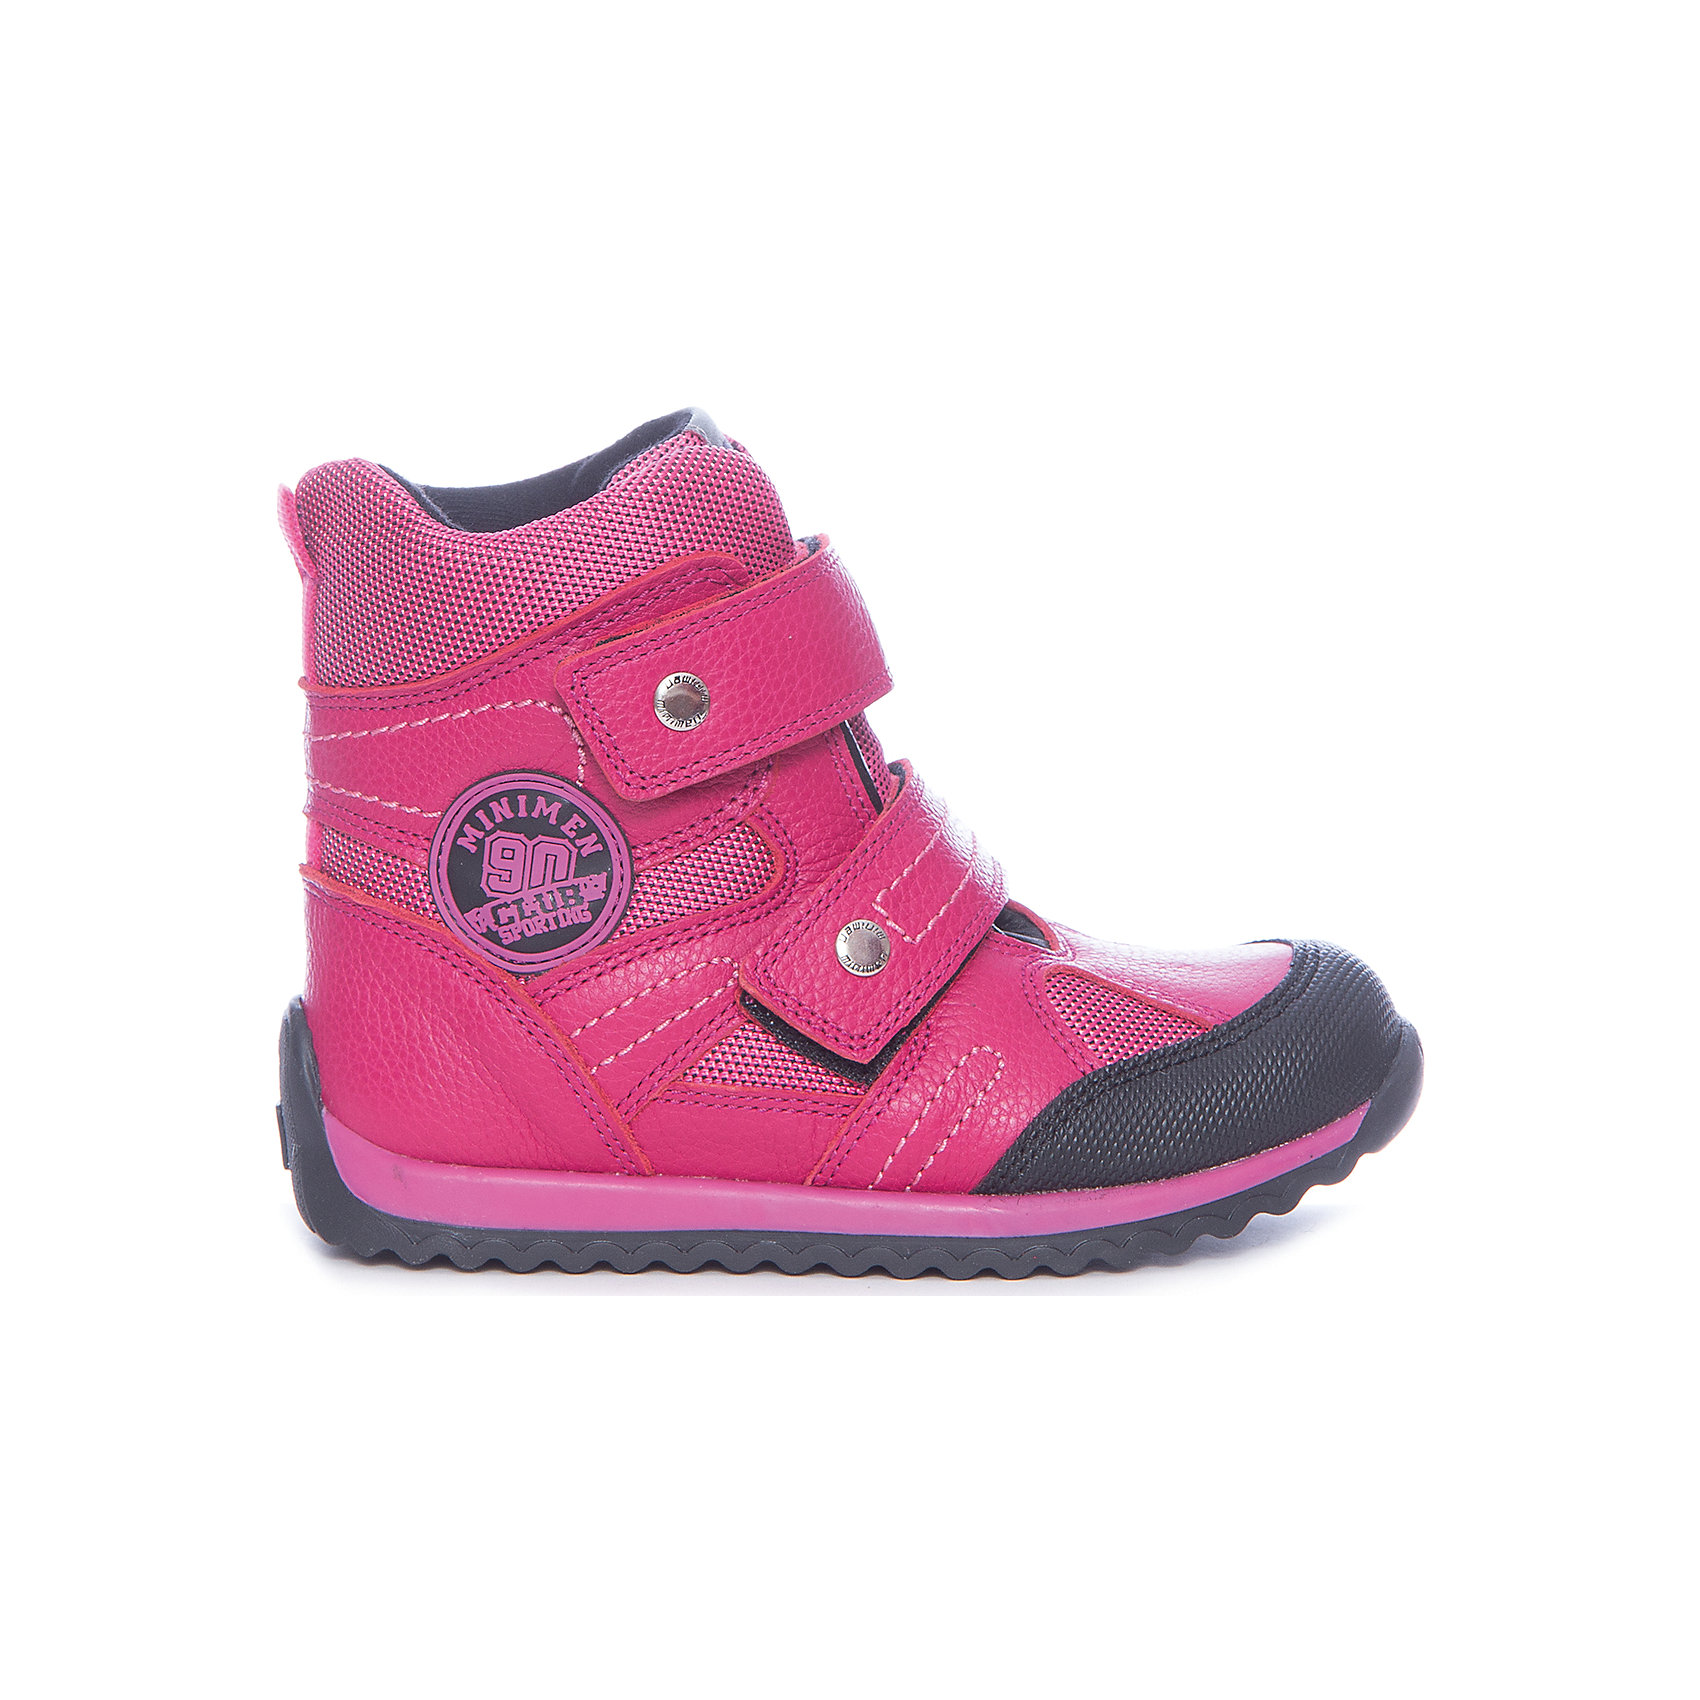 Обувь минимен. Minimen 02-9551-14. 8762791 Ботинки минимен. Minimen ботинки розовые.